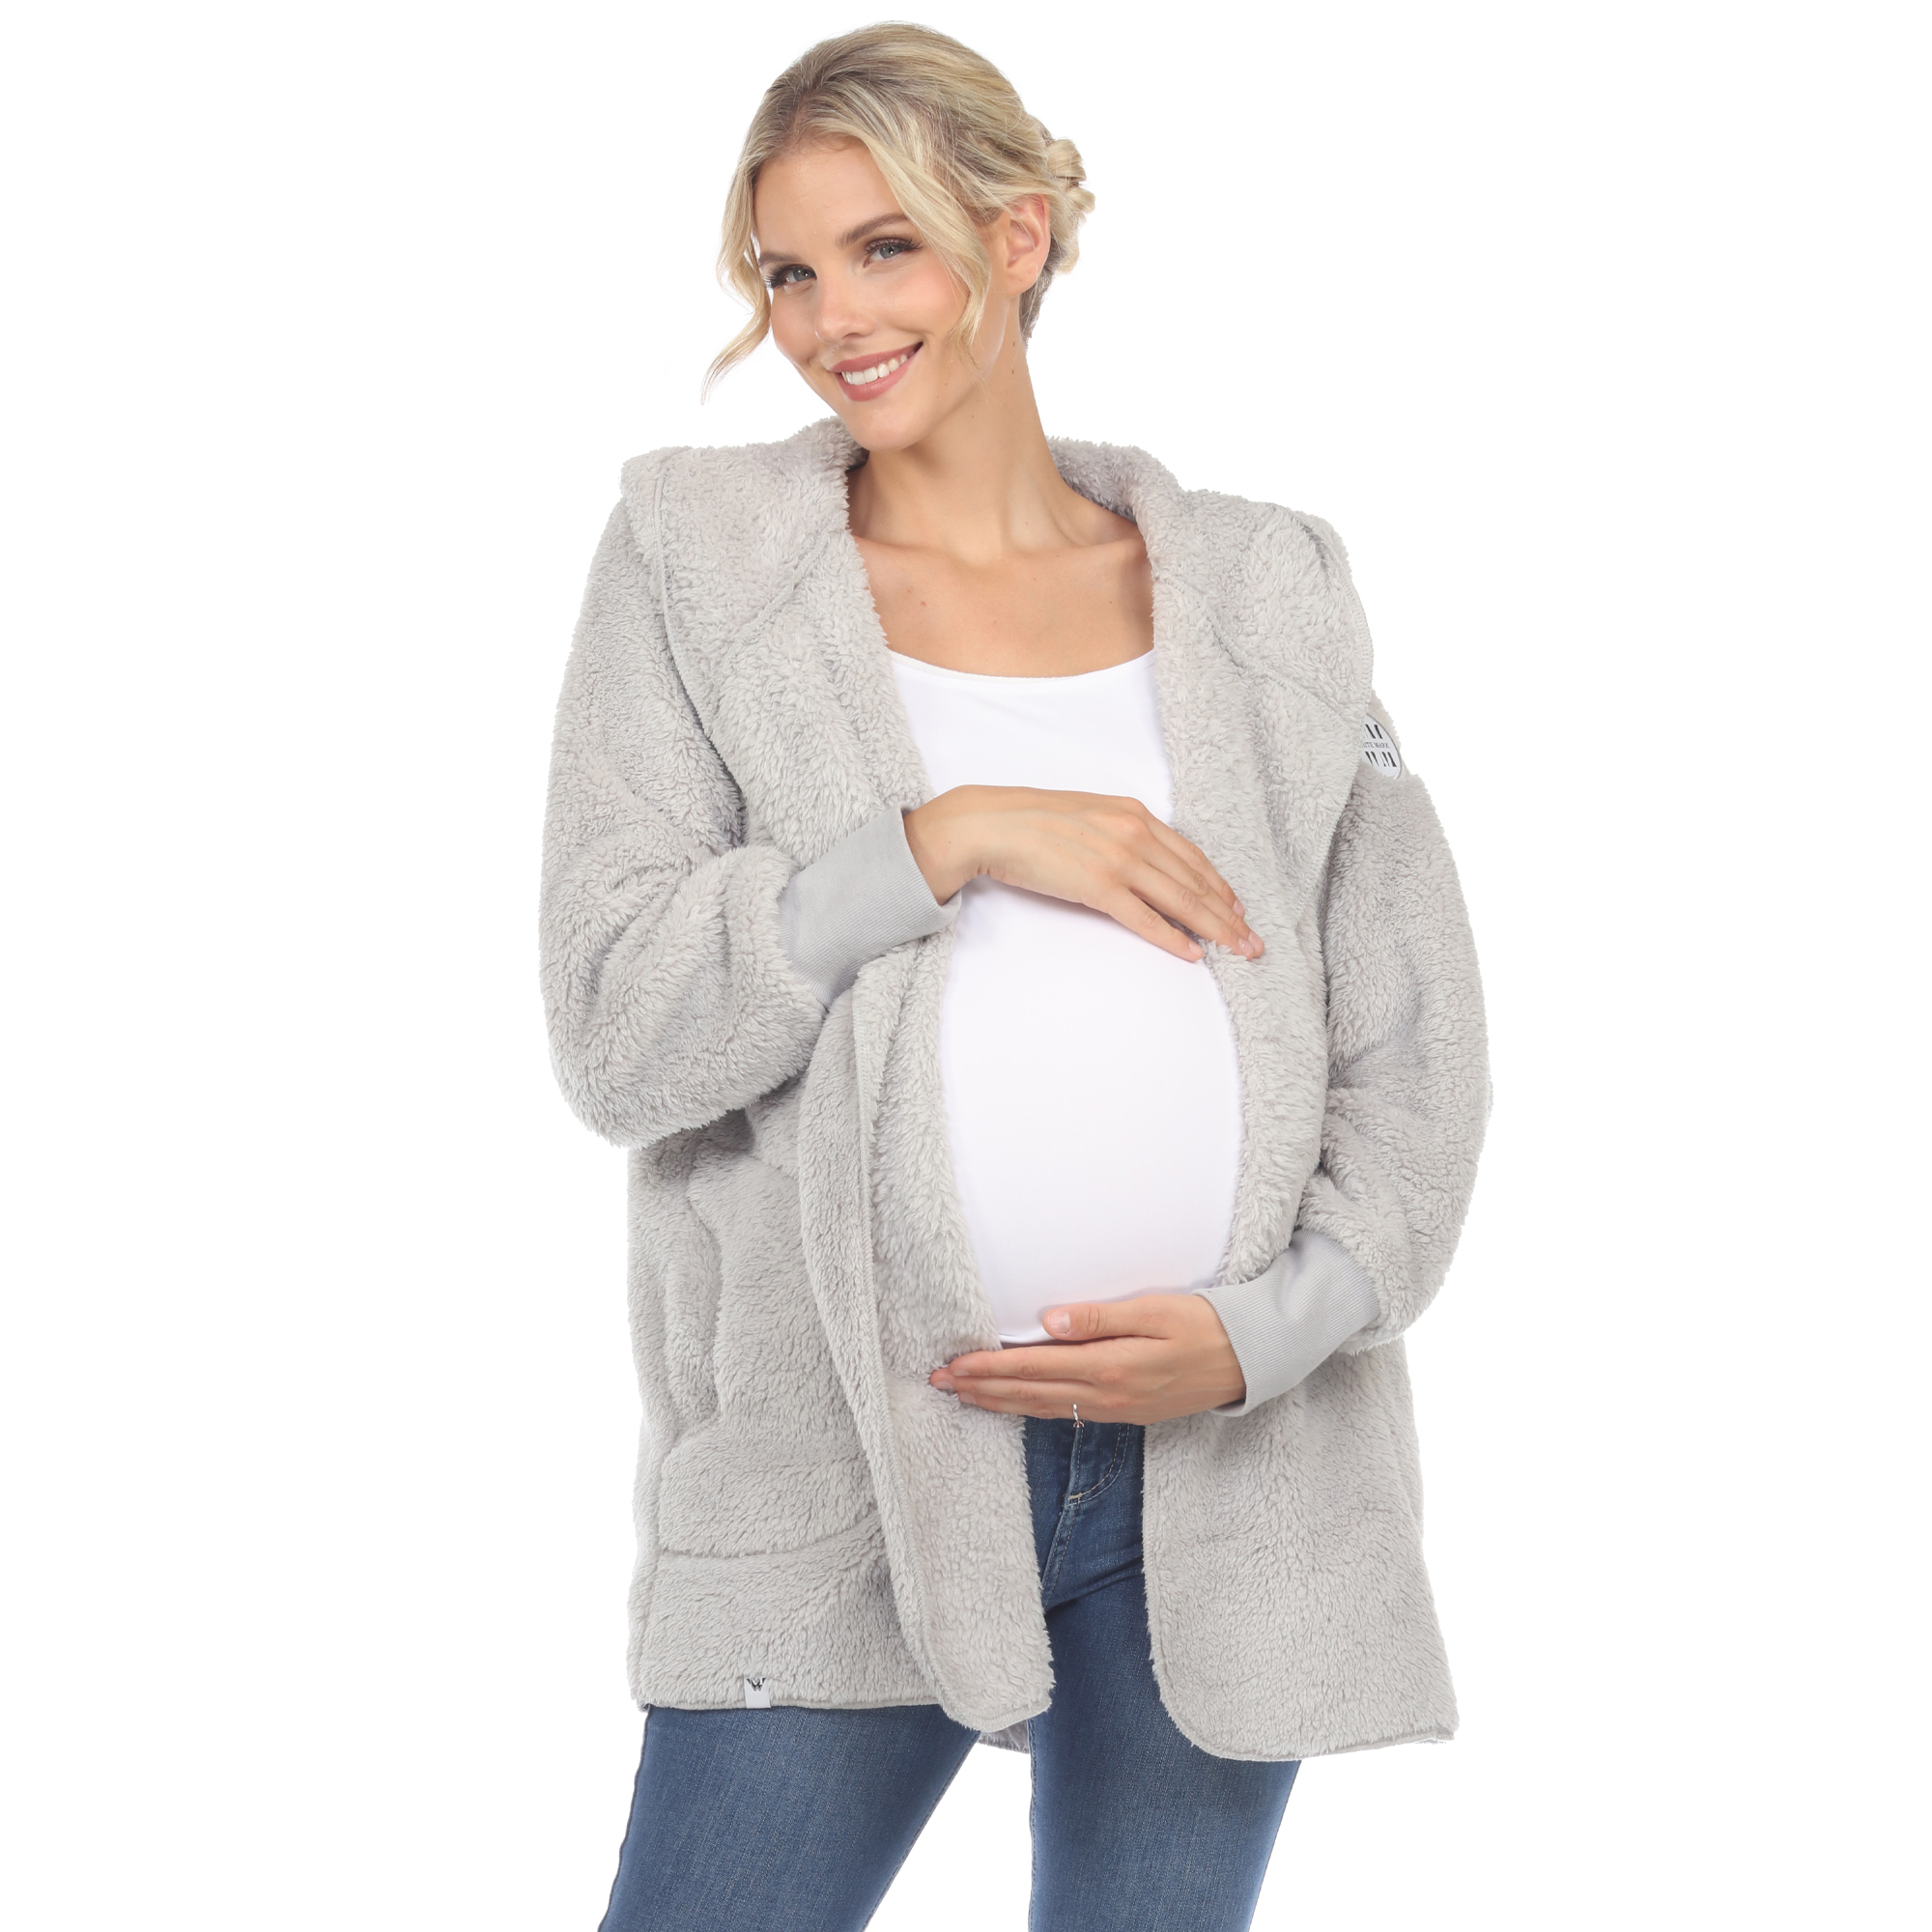 White Mark Womenâs Maternity Plush Hooded Cardigan With Pockets - Grey, 1X/2X